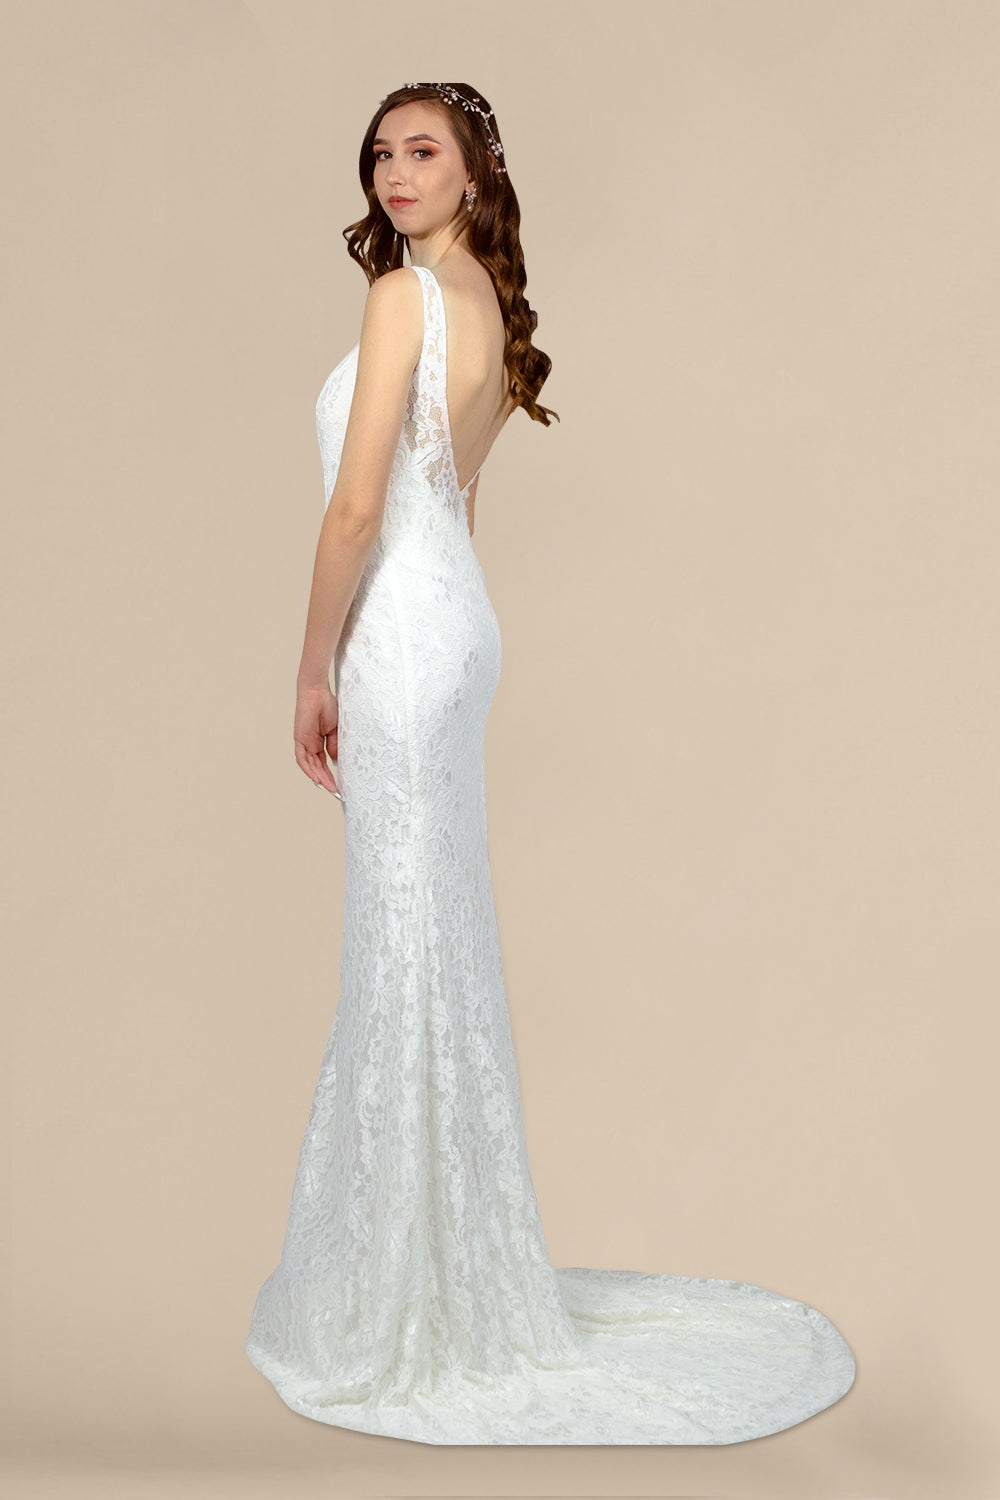 boho lace wedding dresses australia online dressmaker envious bridal & formal